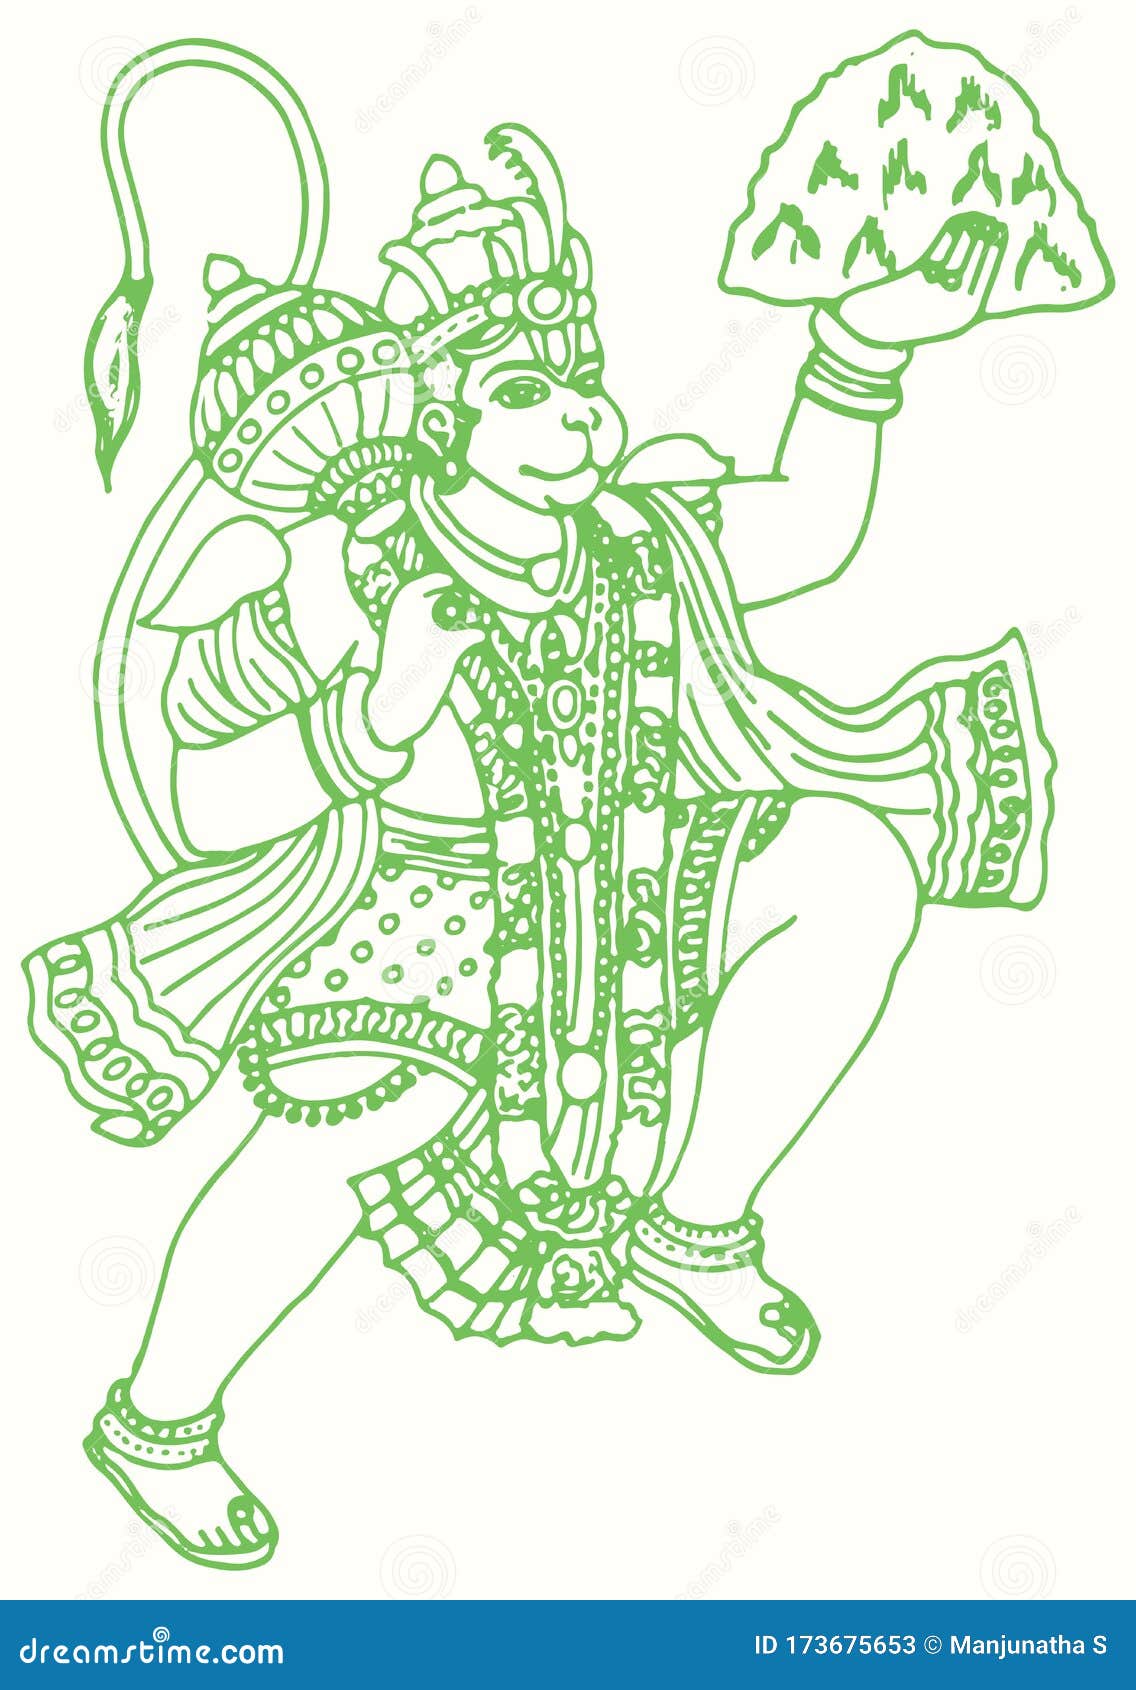 Hanuman sketch | Lord hanuman wallpapers, Hanuman wallpaper, Hanuman tattoo